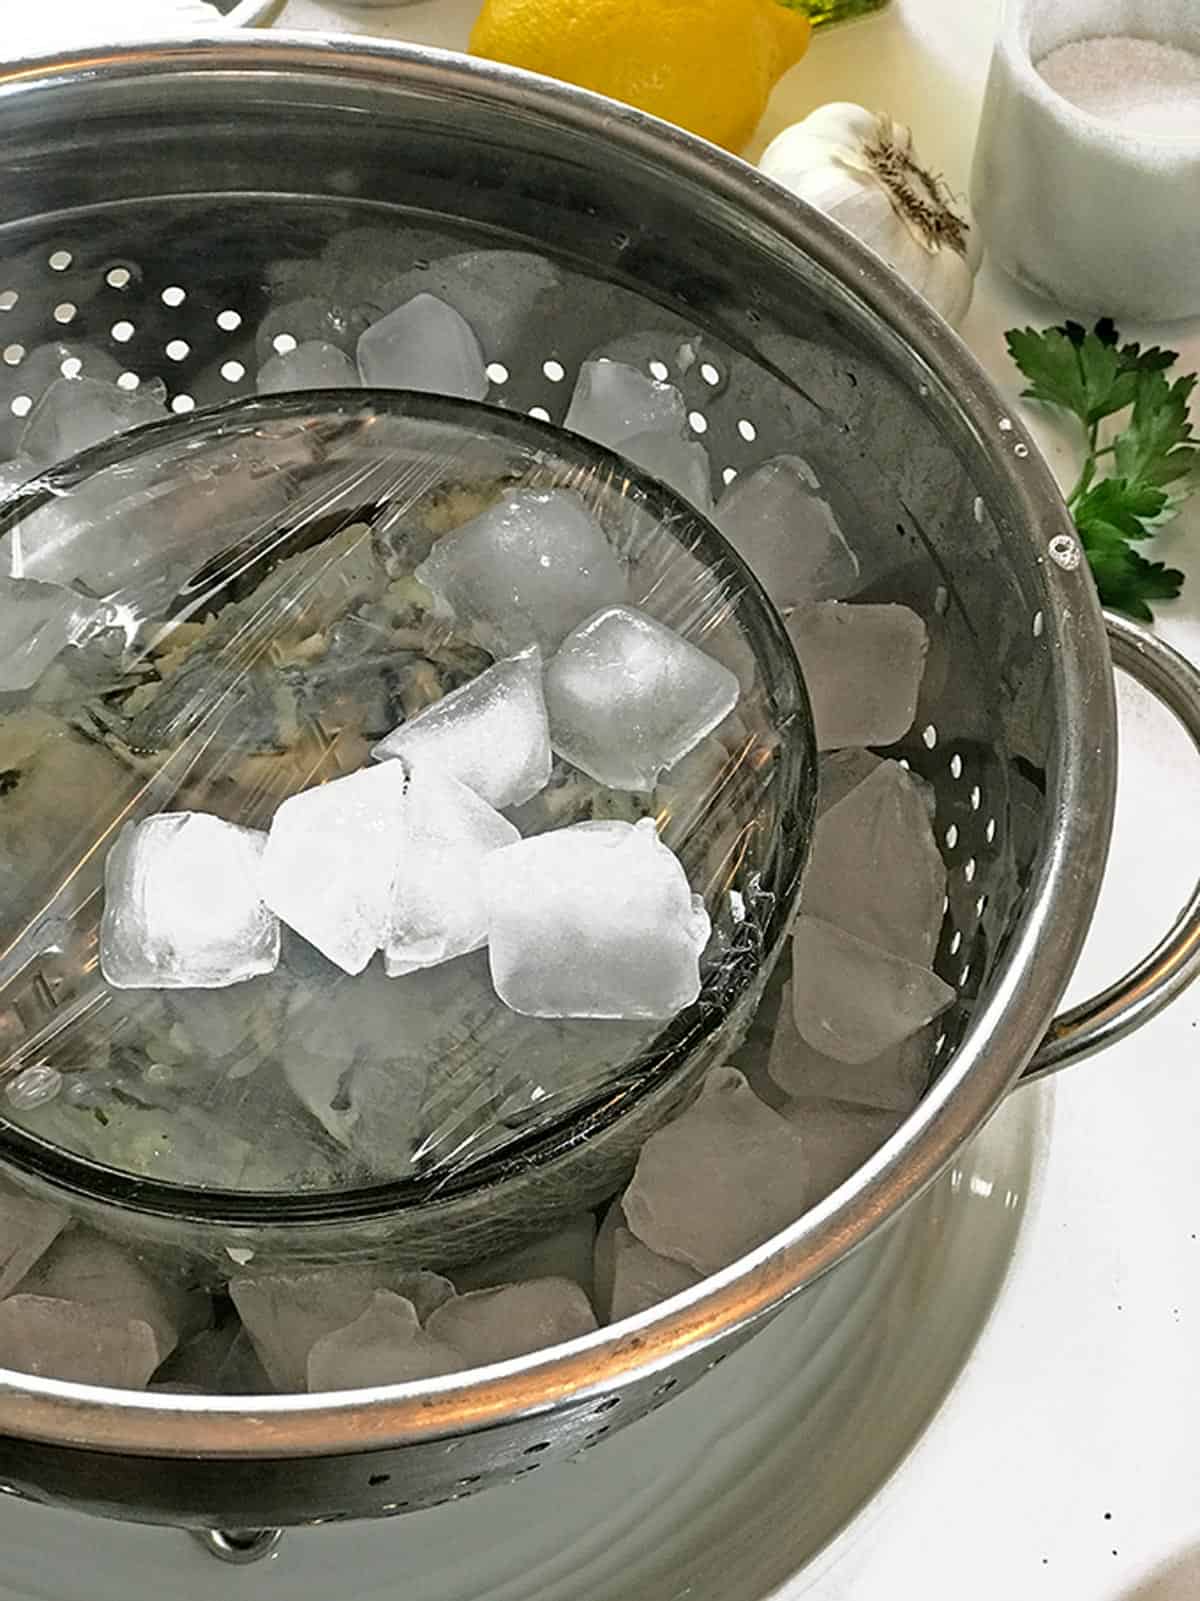 A bowl of shrimp sitting on ice.